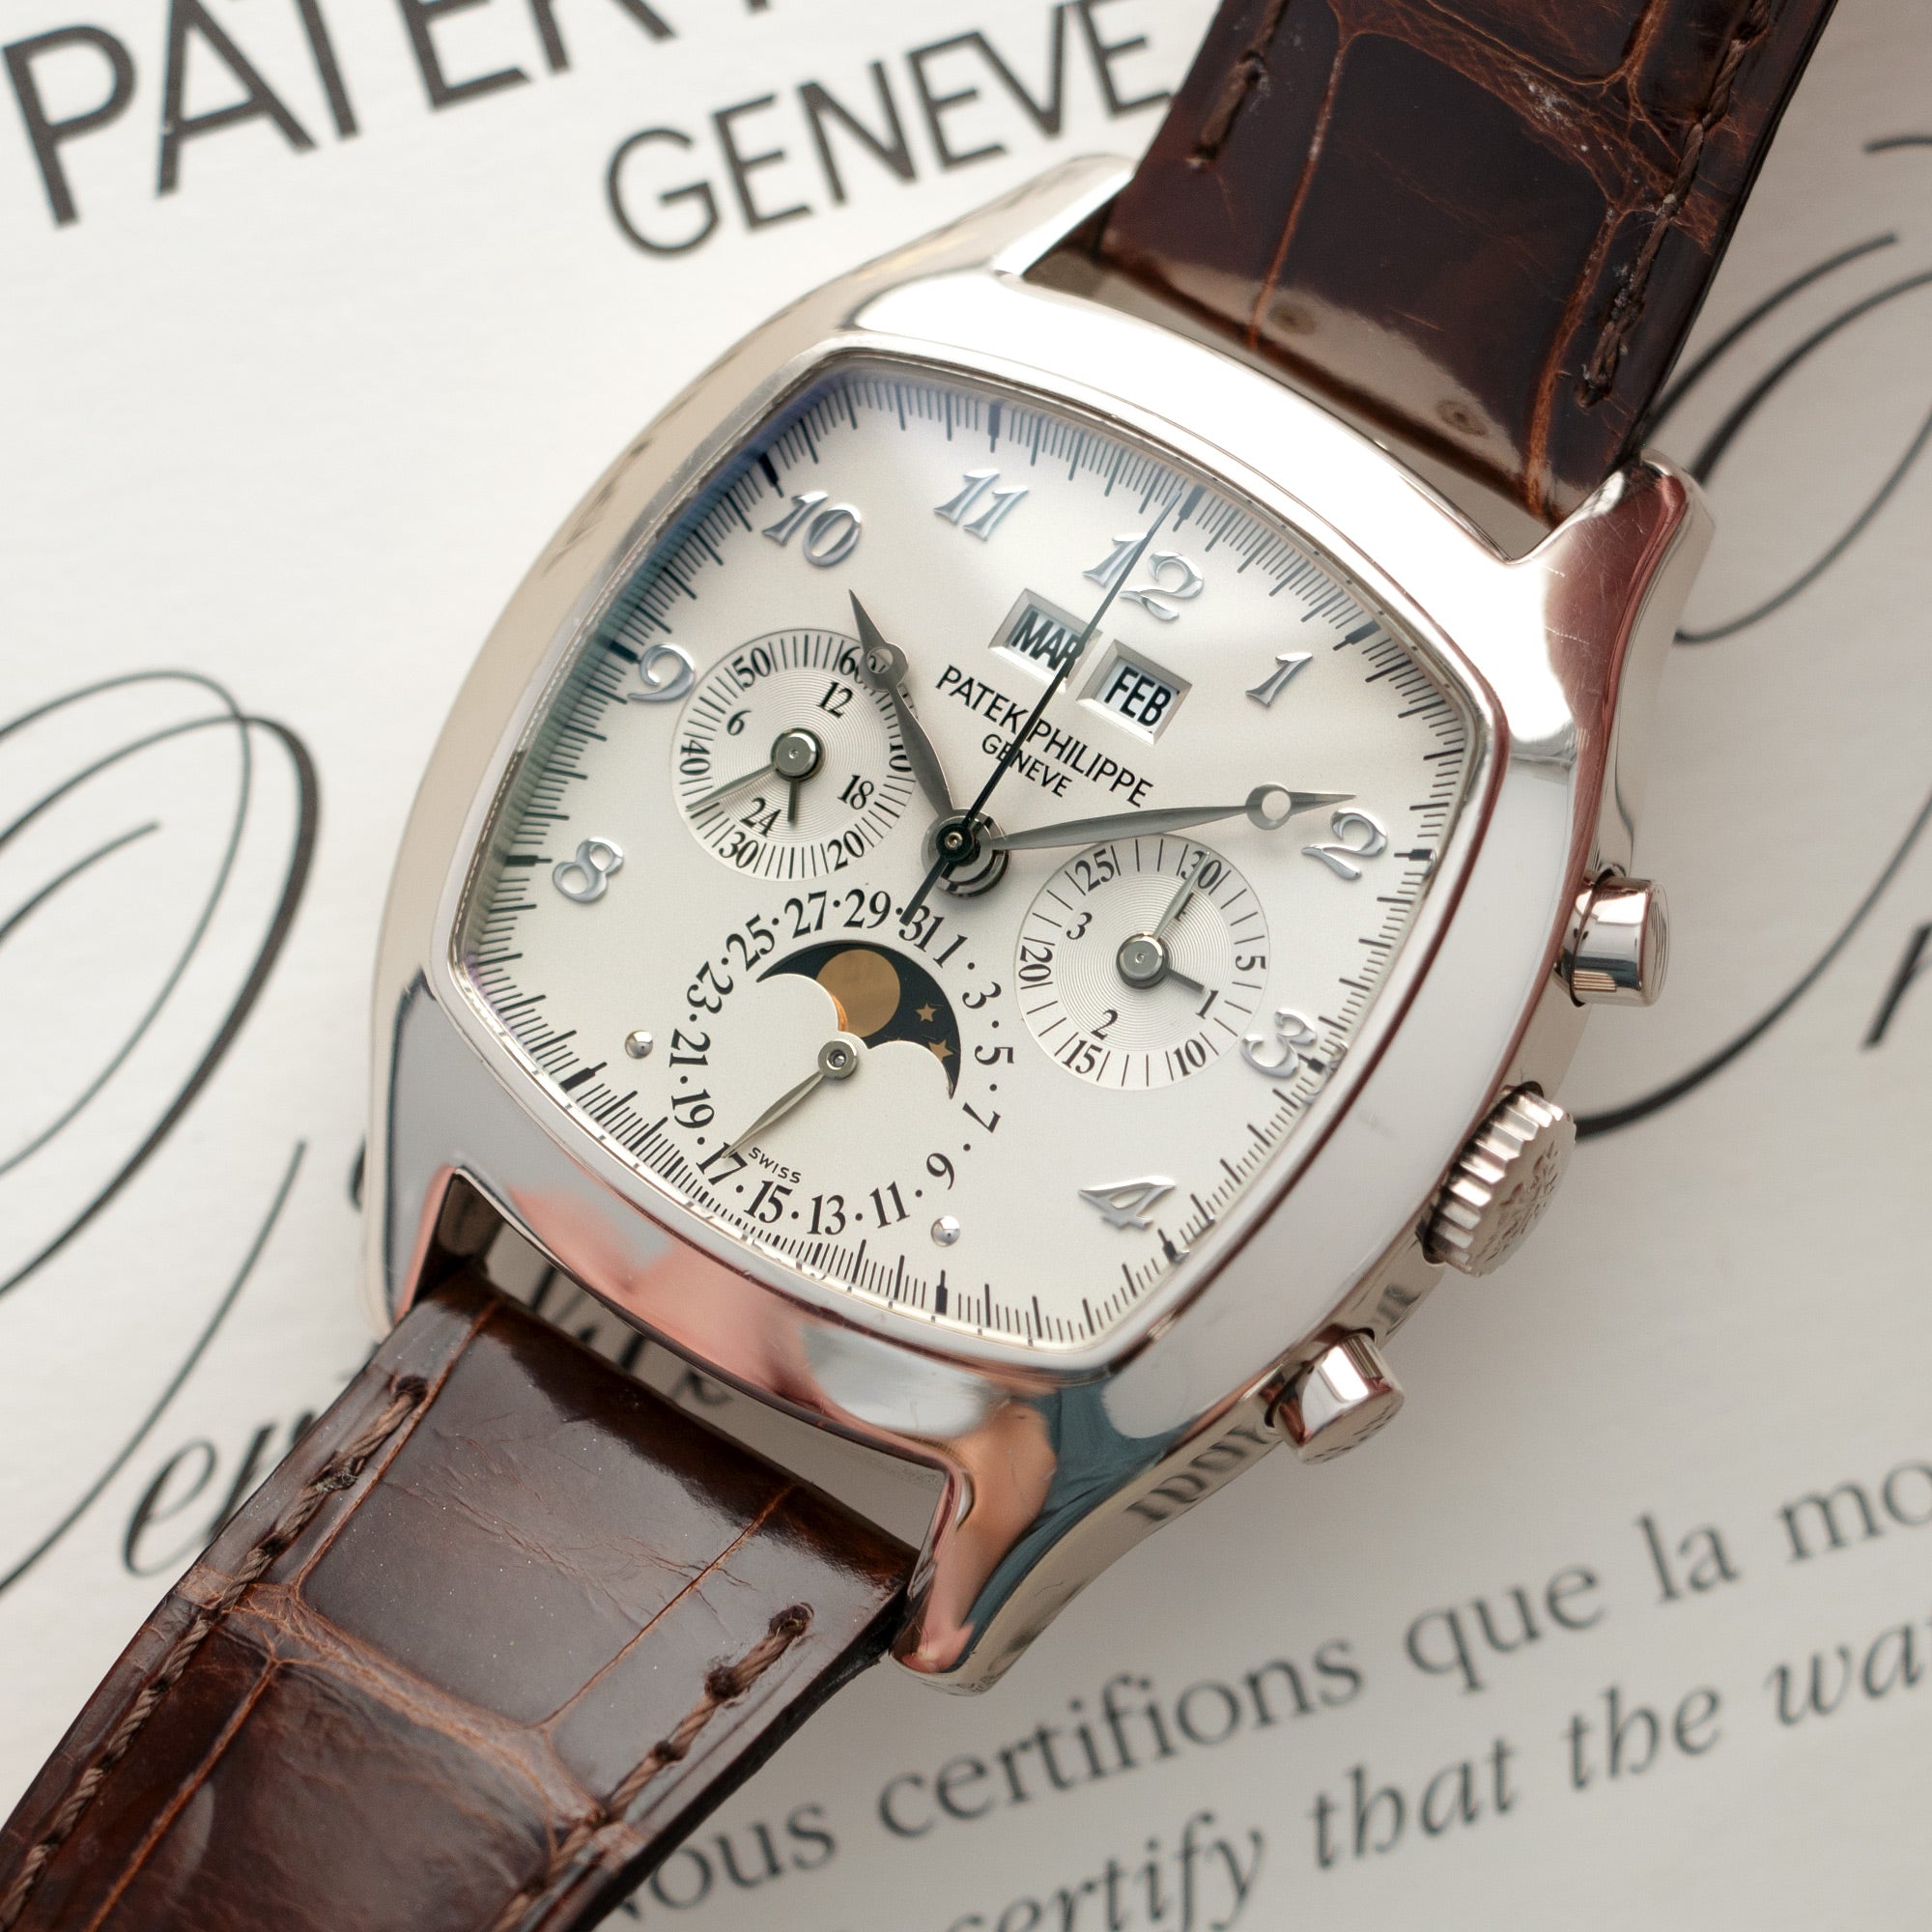 Patek Philippe - Patek Philippe White Gold Perpetual Calendar Chrono Watch Ref. 5020 - The Keystone Watches